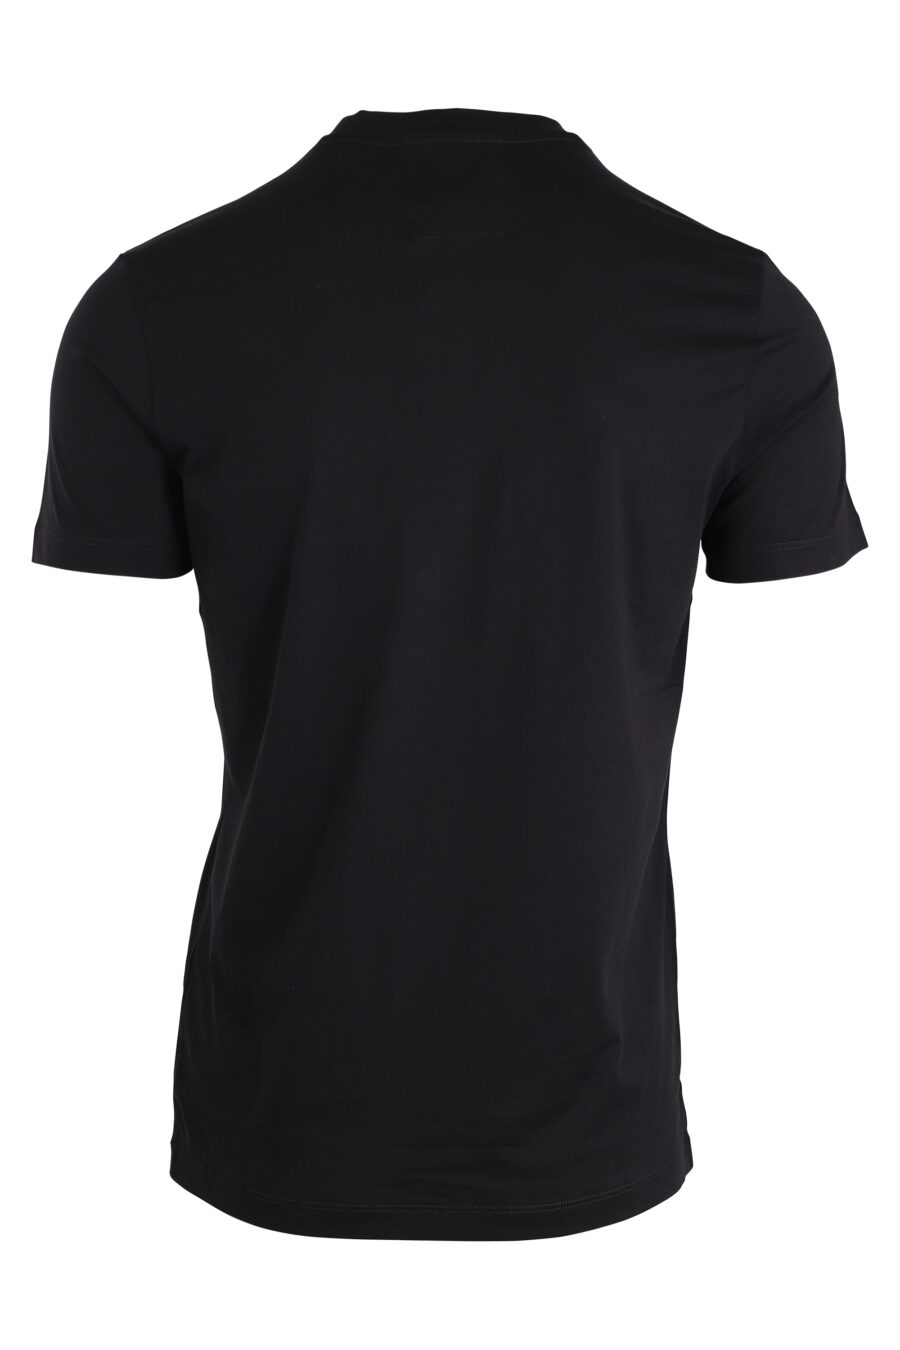 T-shirt noir avec lettrage blanc maxilogo - IMG 4251